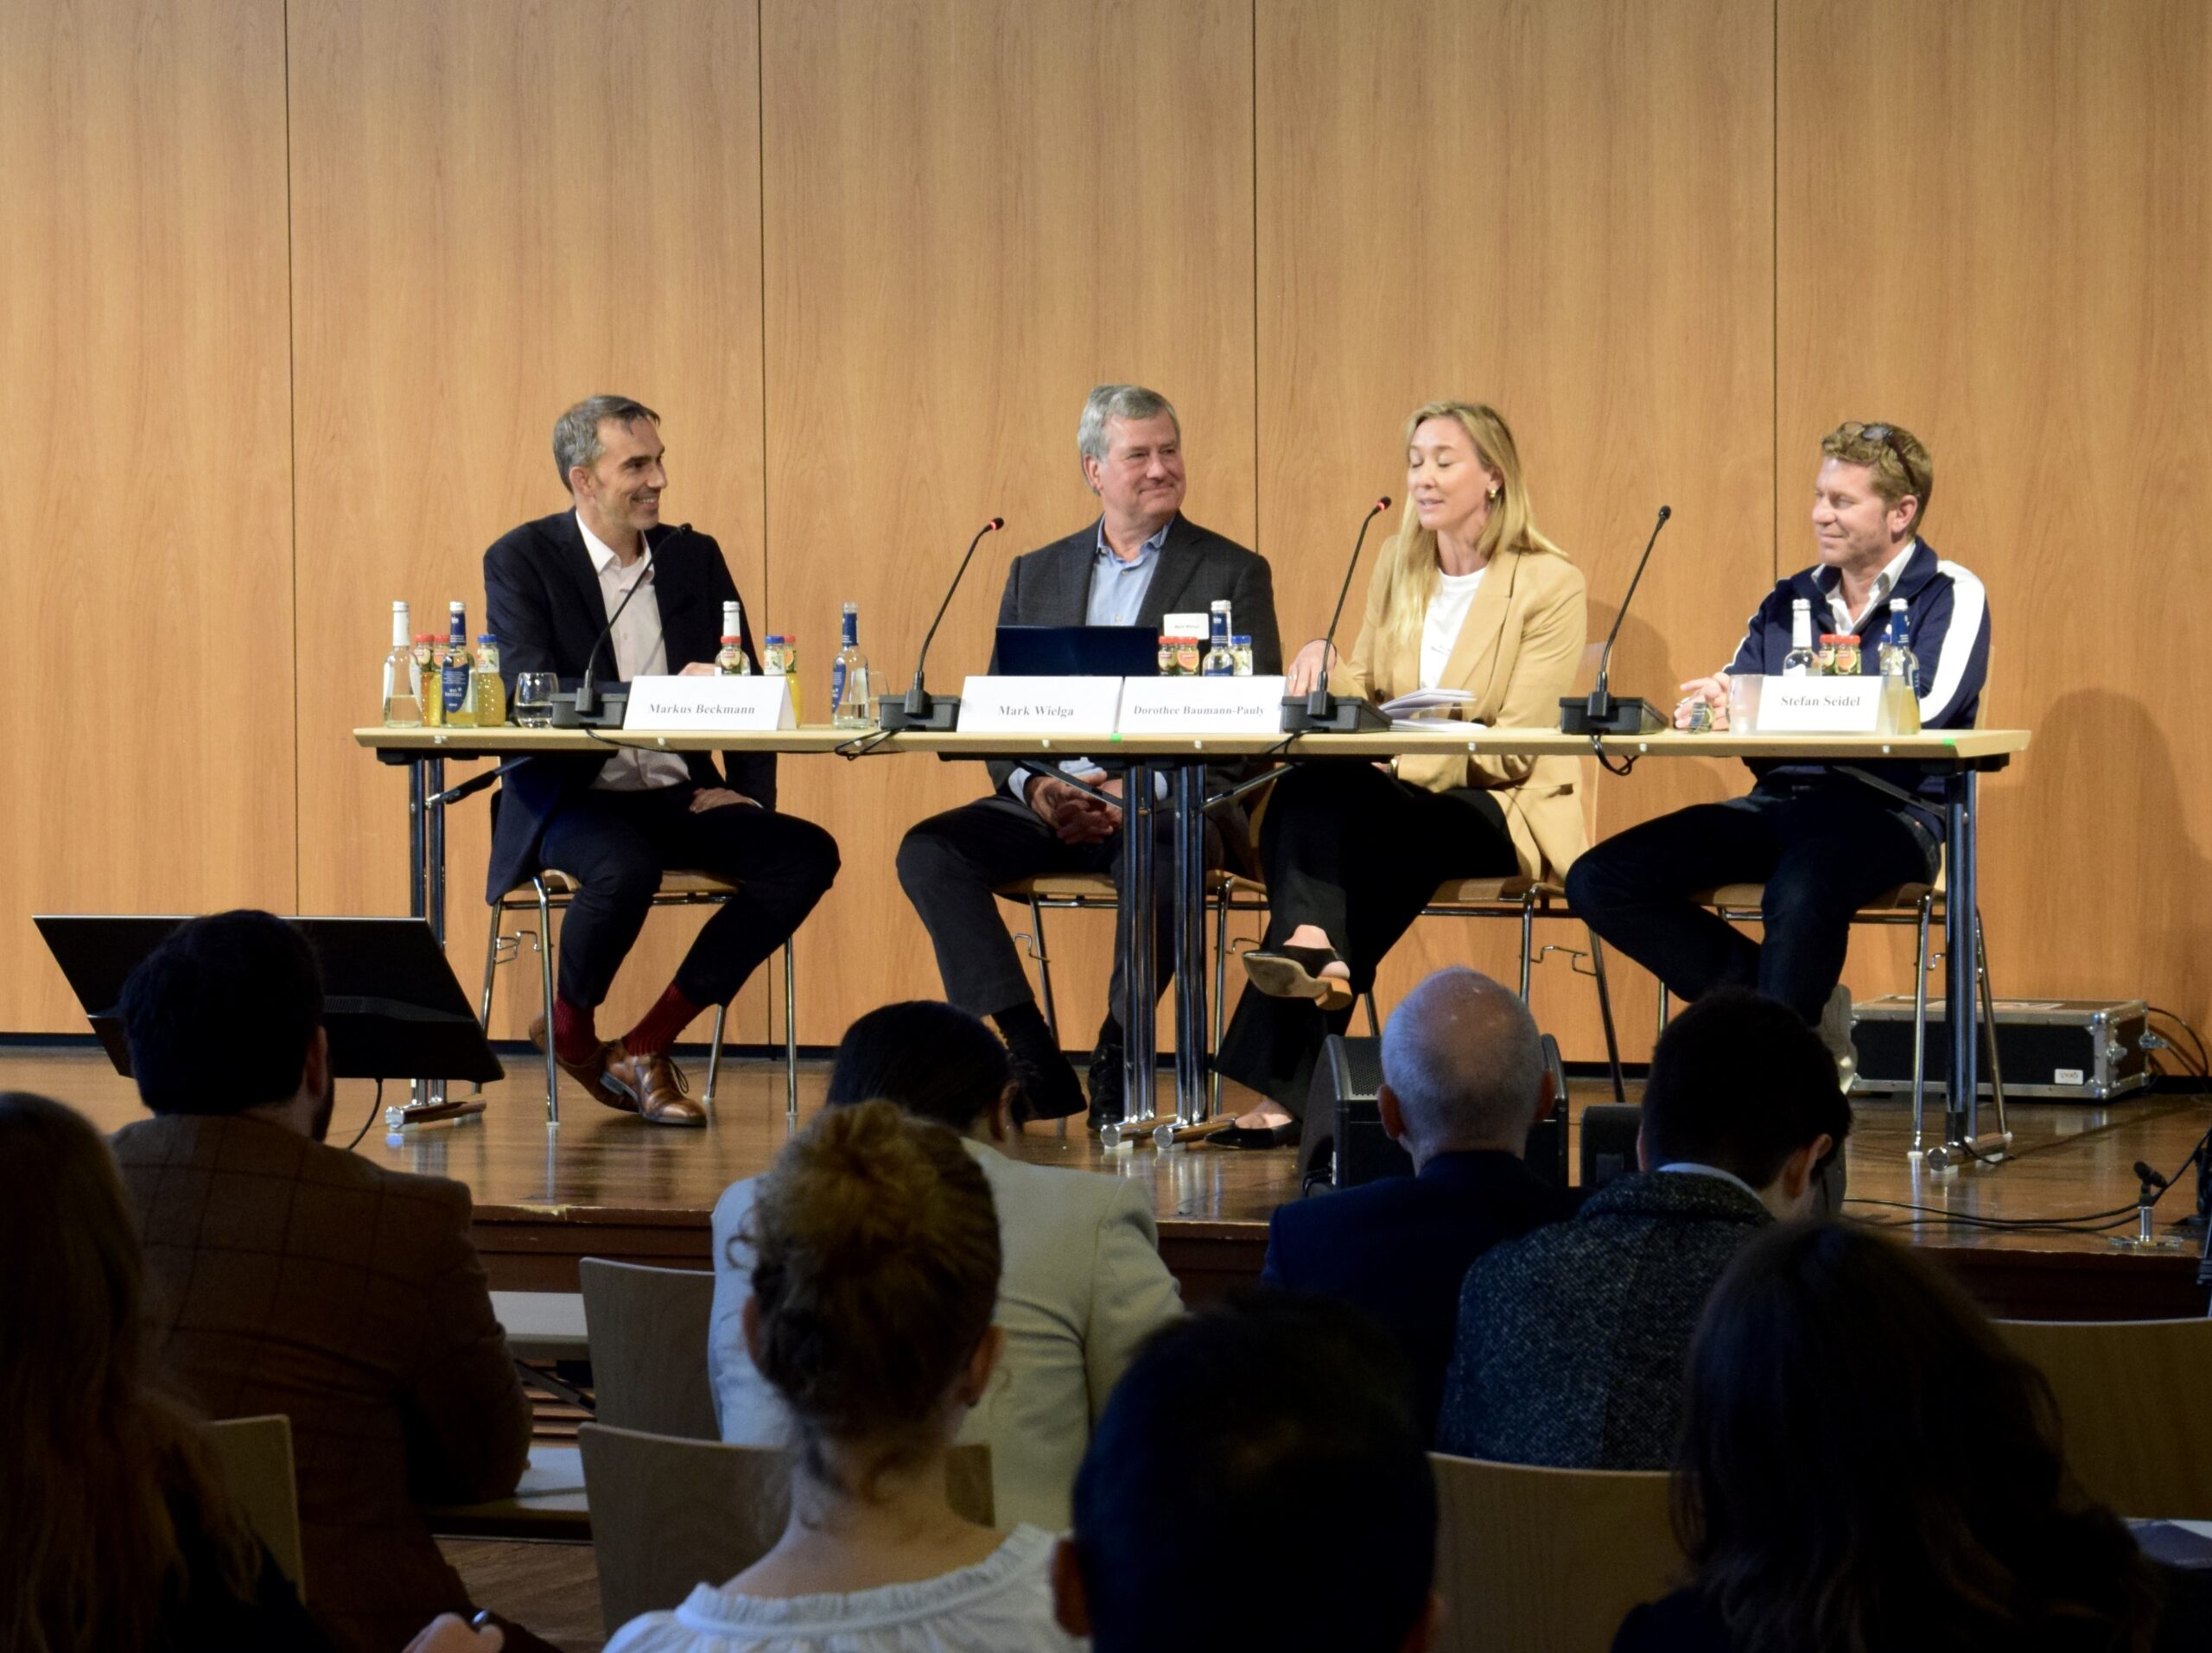 Panel on Rethinking Corporate Purposes with Markus Beckmann (Moderator, FAU), Dorothee Baumann-Pauly (Unisversity of Geneva), Mark Wielga (NomoGaia), Stefan Seidel (Puma)